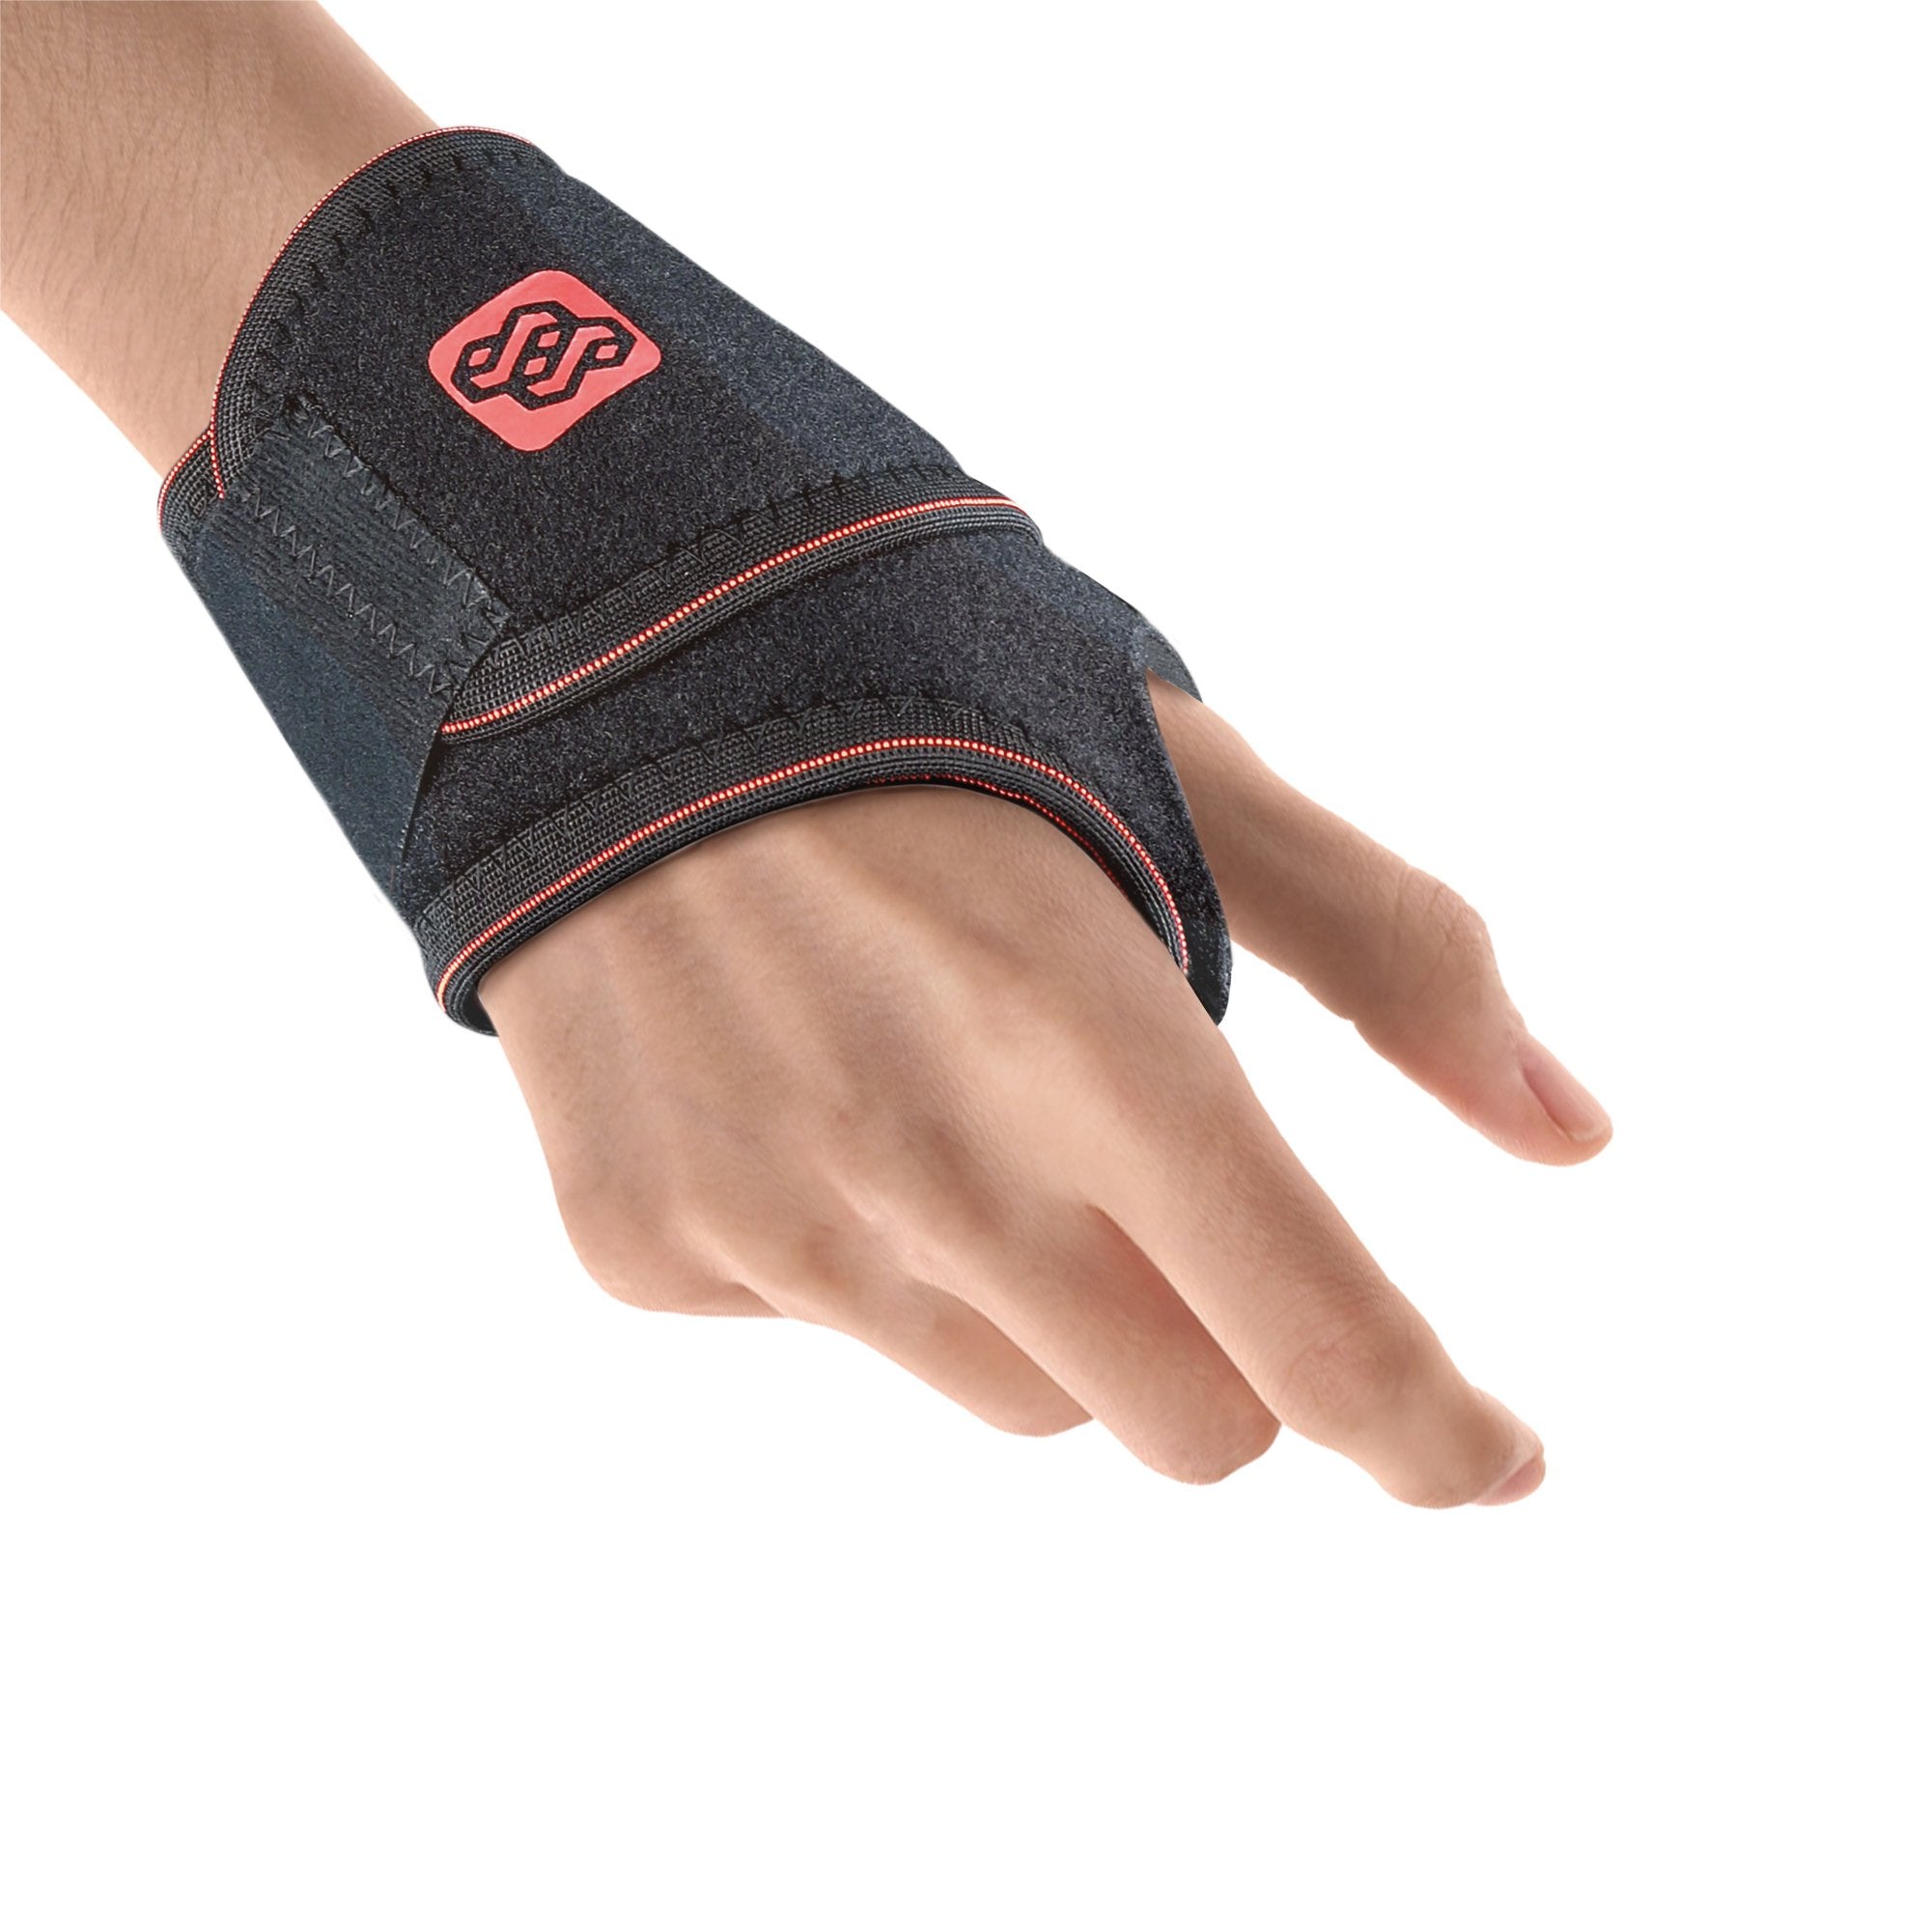 Wrist Brace Support with straps - KEFLUK